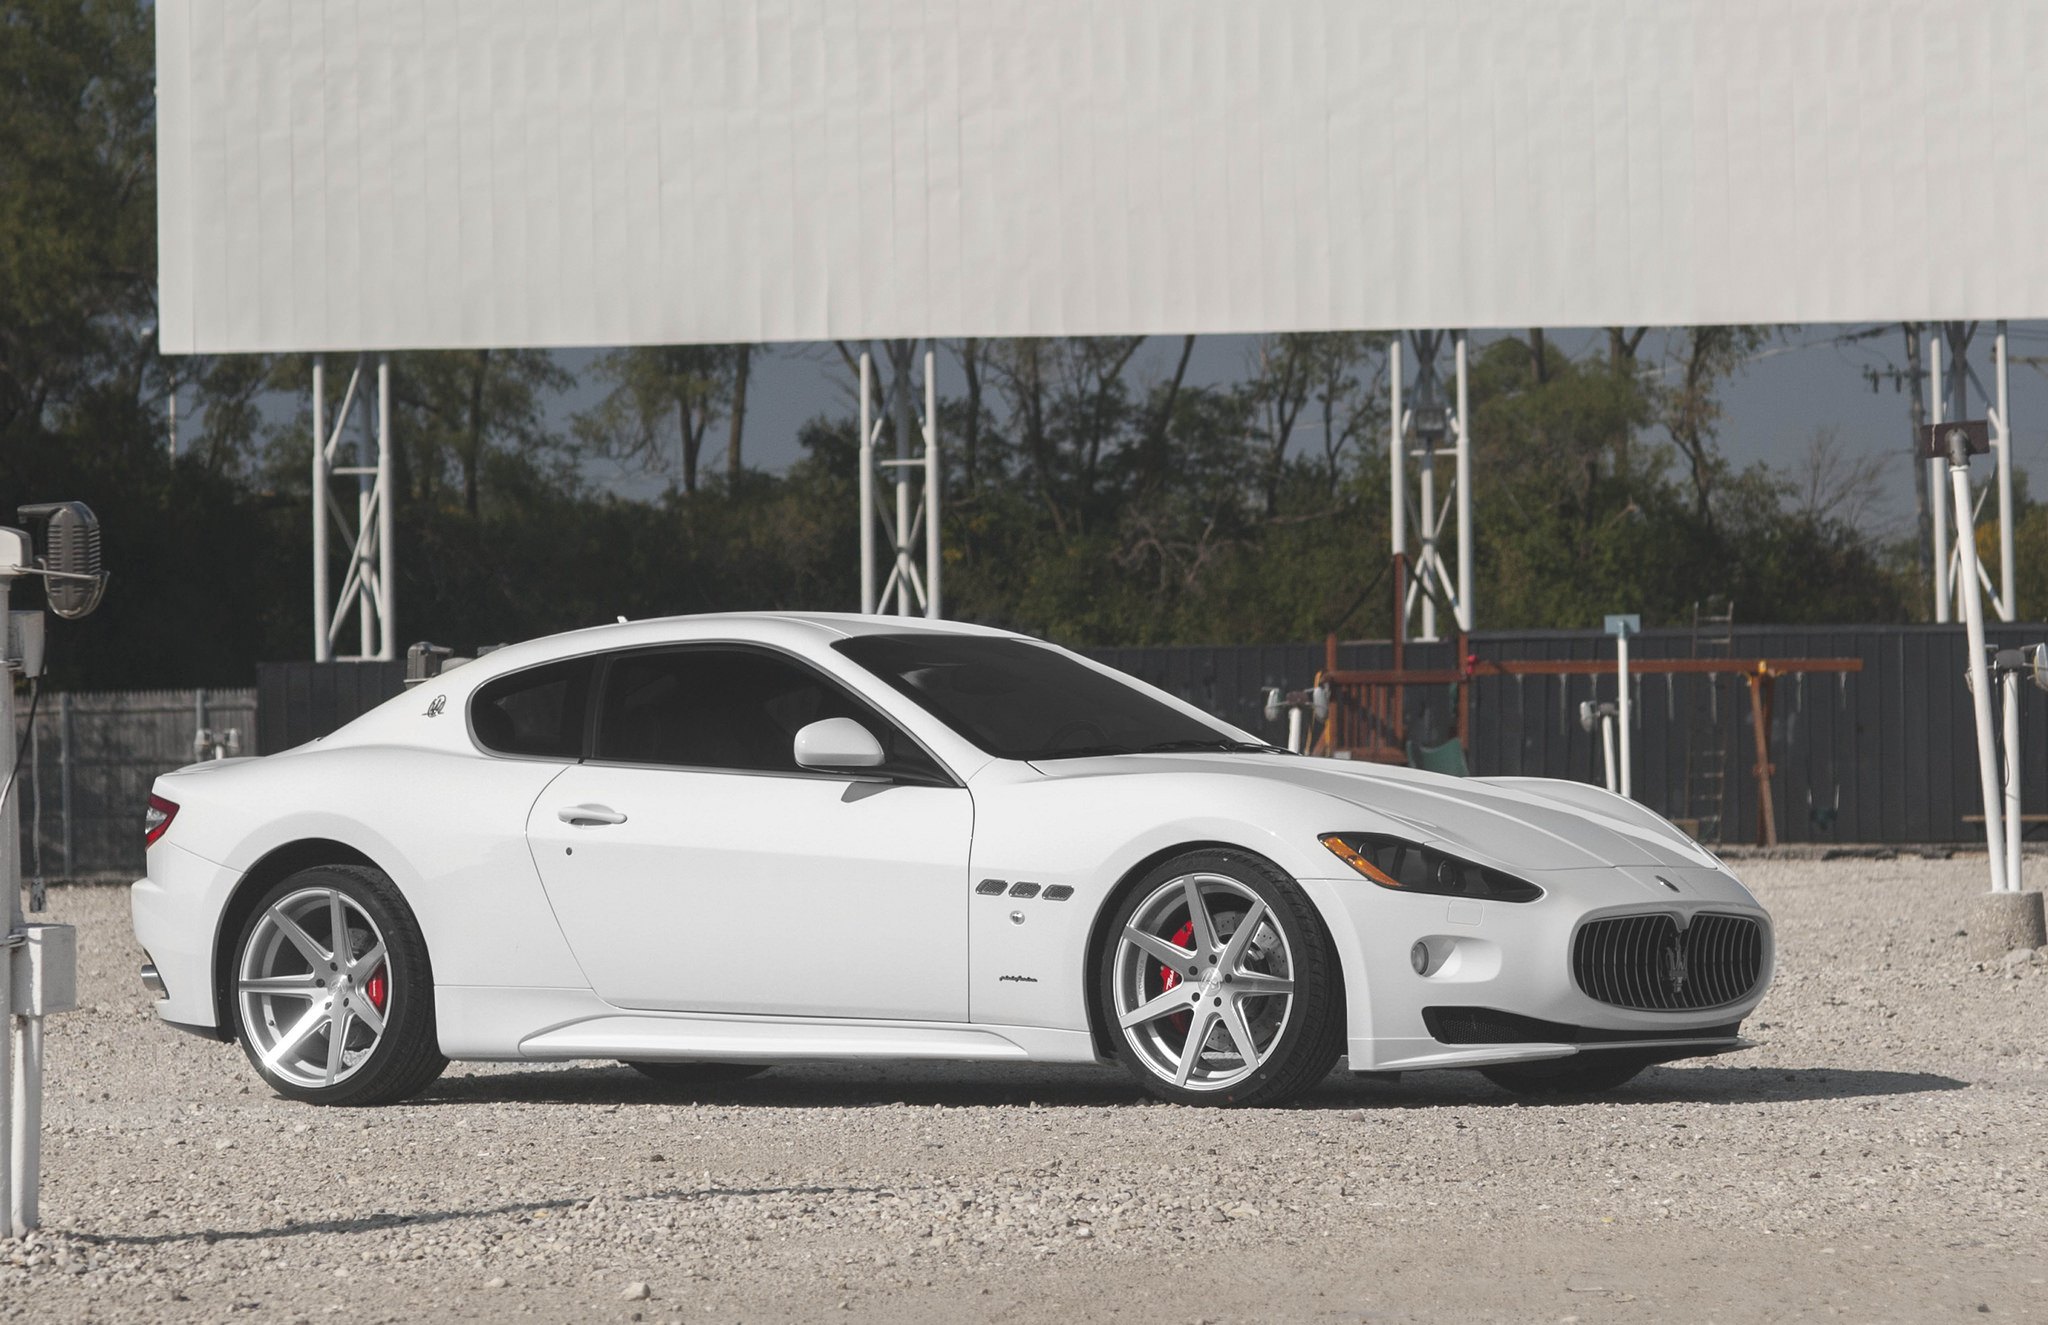 Custom Chrome Wheels on White Maserati Granturismo - Photo by zandbox